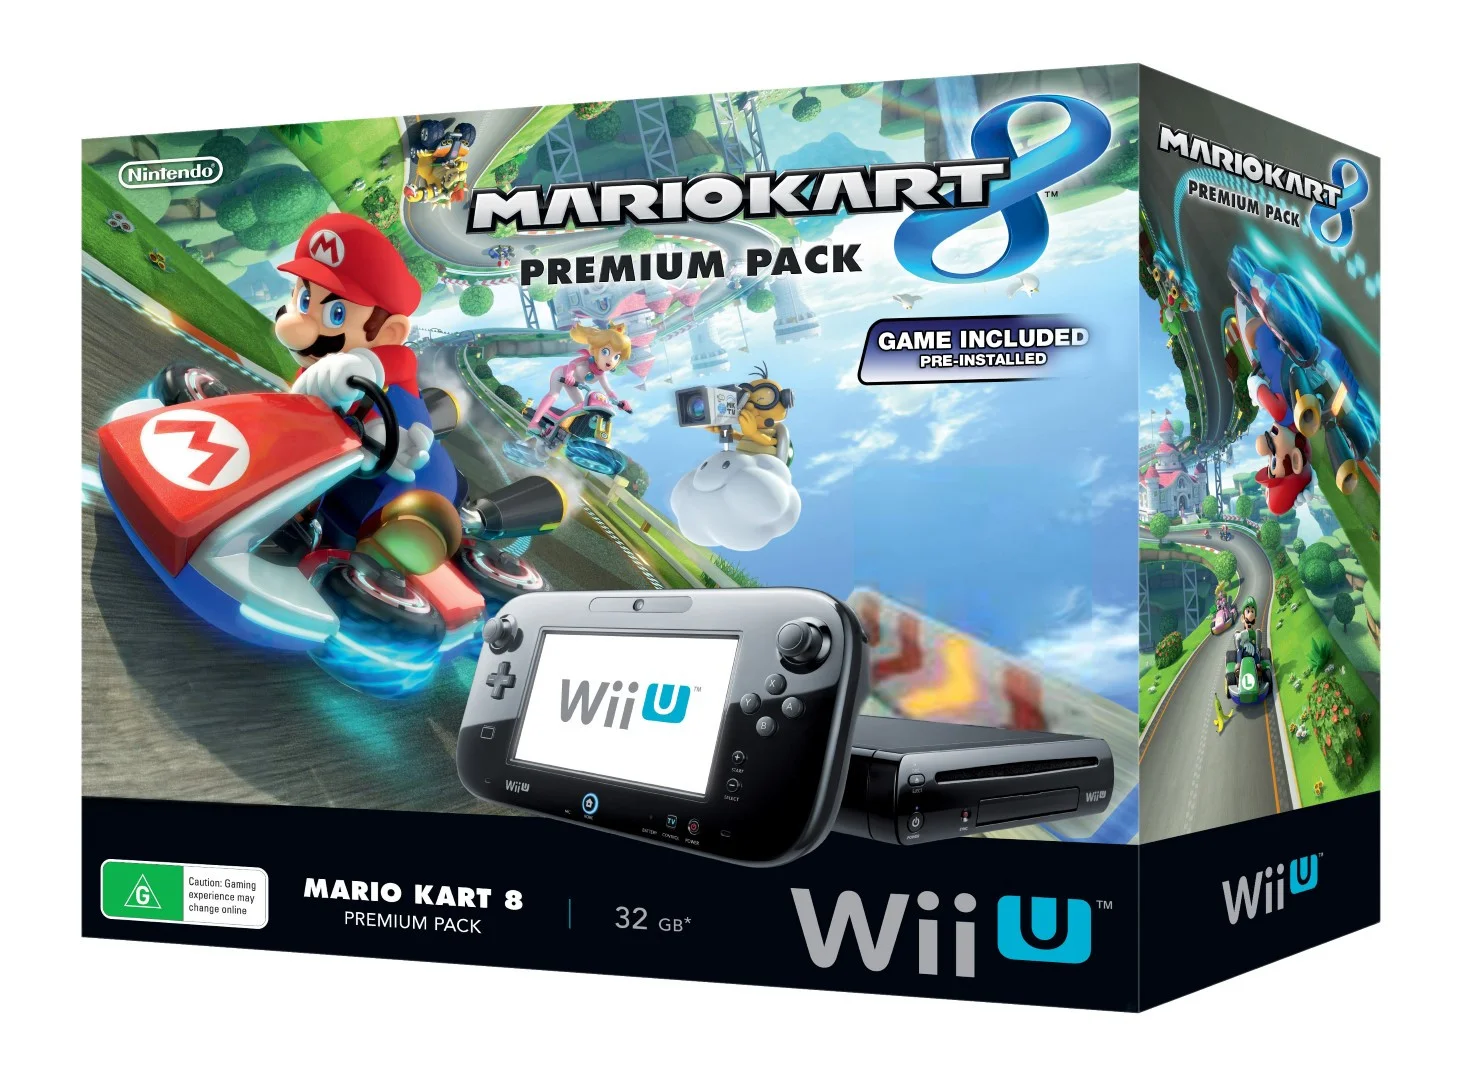 Нинтендо вии ю. Игровая приставка Nintendo Wii u Premium Pack. Mario Kart 8 Wii u. Консоль игровая приставка Nintendo Wii u Premium Pack. Wii u Mario Kart 8 Premium Pack.